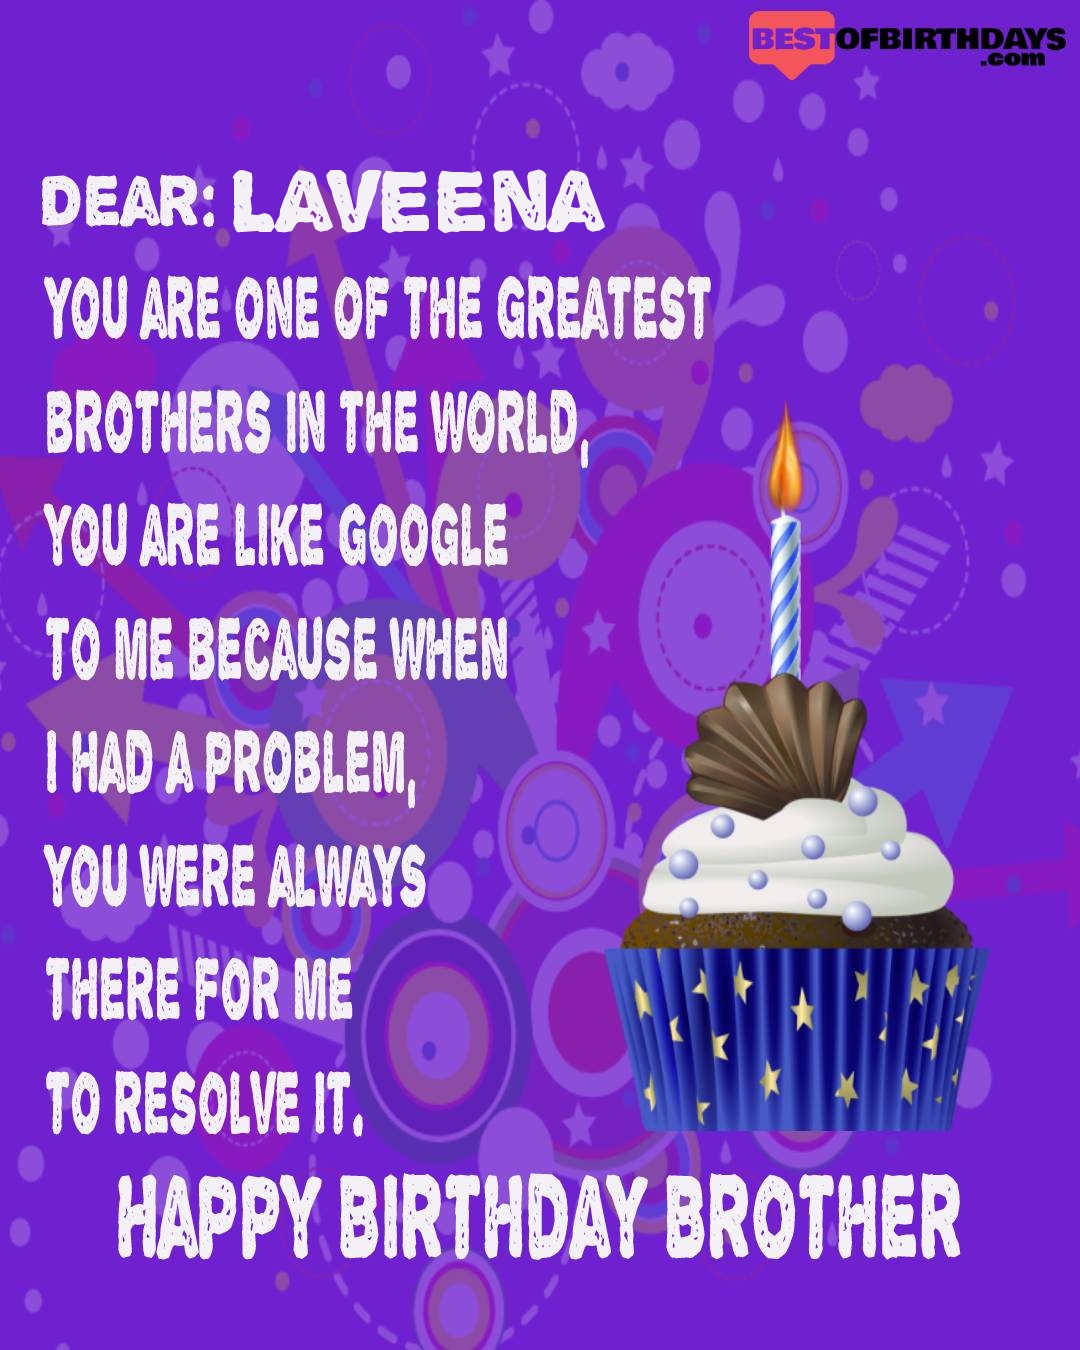 Happy birthday laveena bhai brother bro